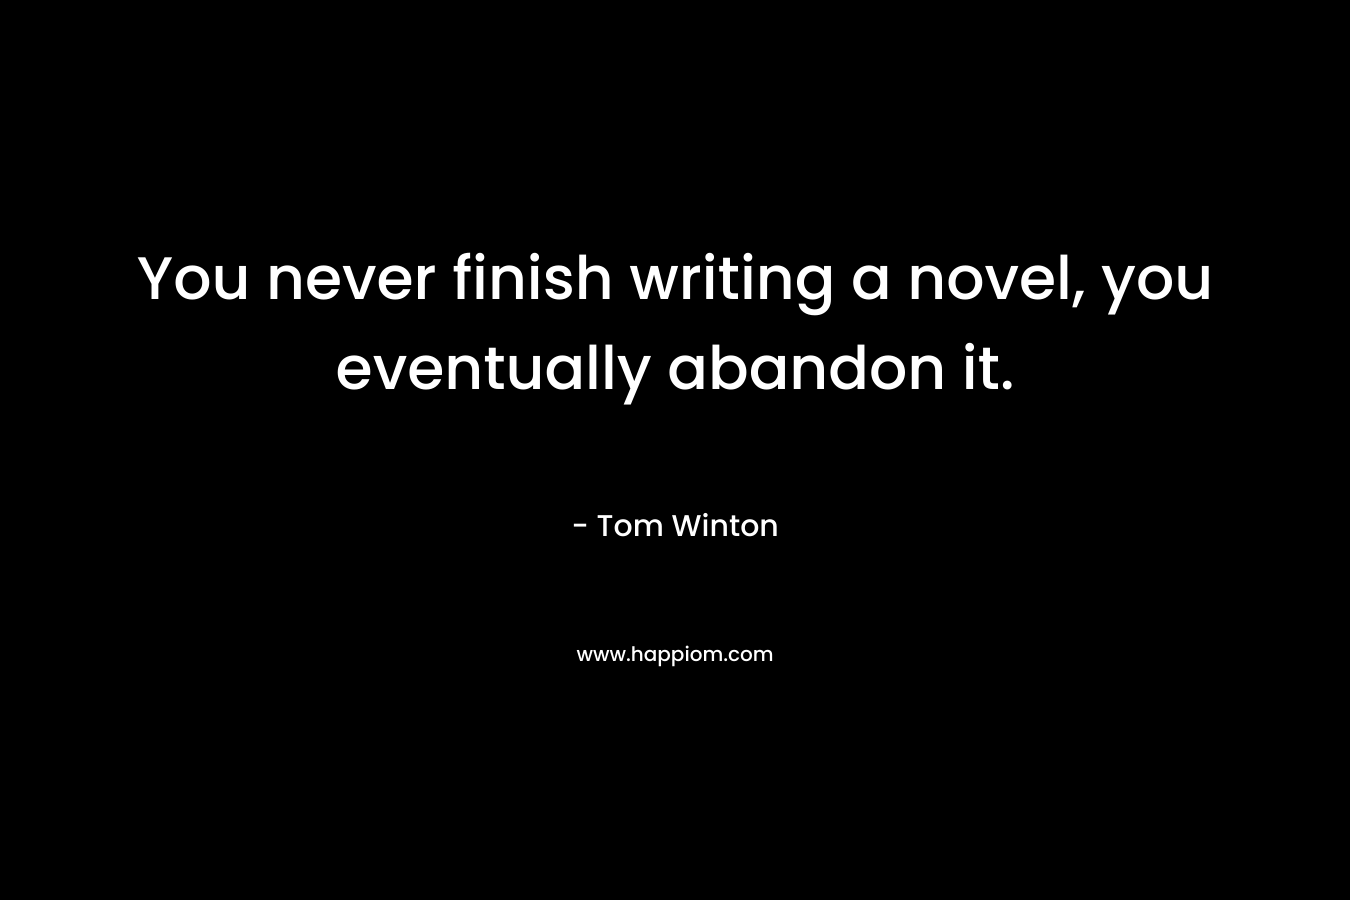 You never finish writing a novel, you eventually abandon it.